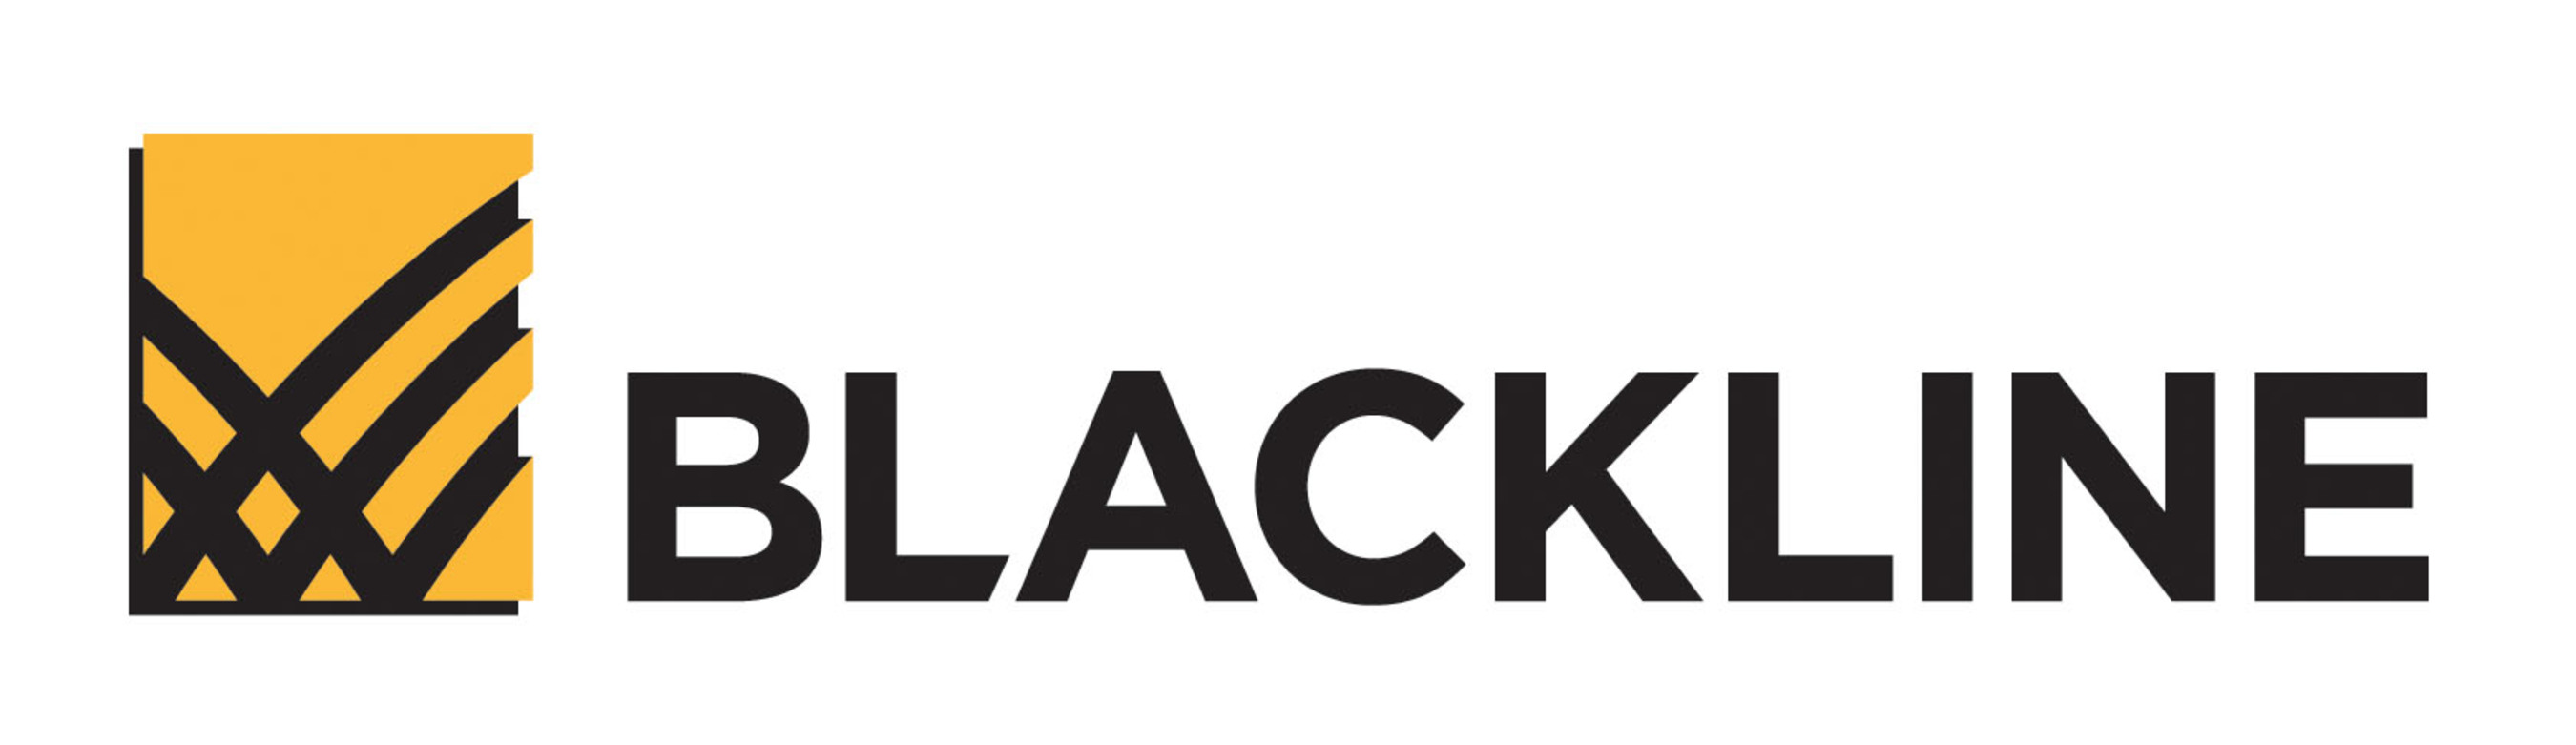 BlackLine company logo